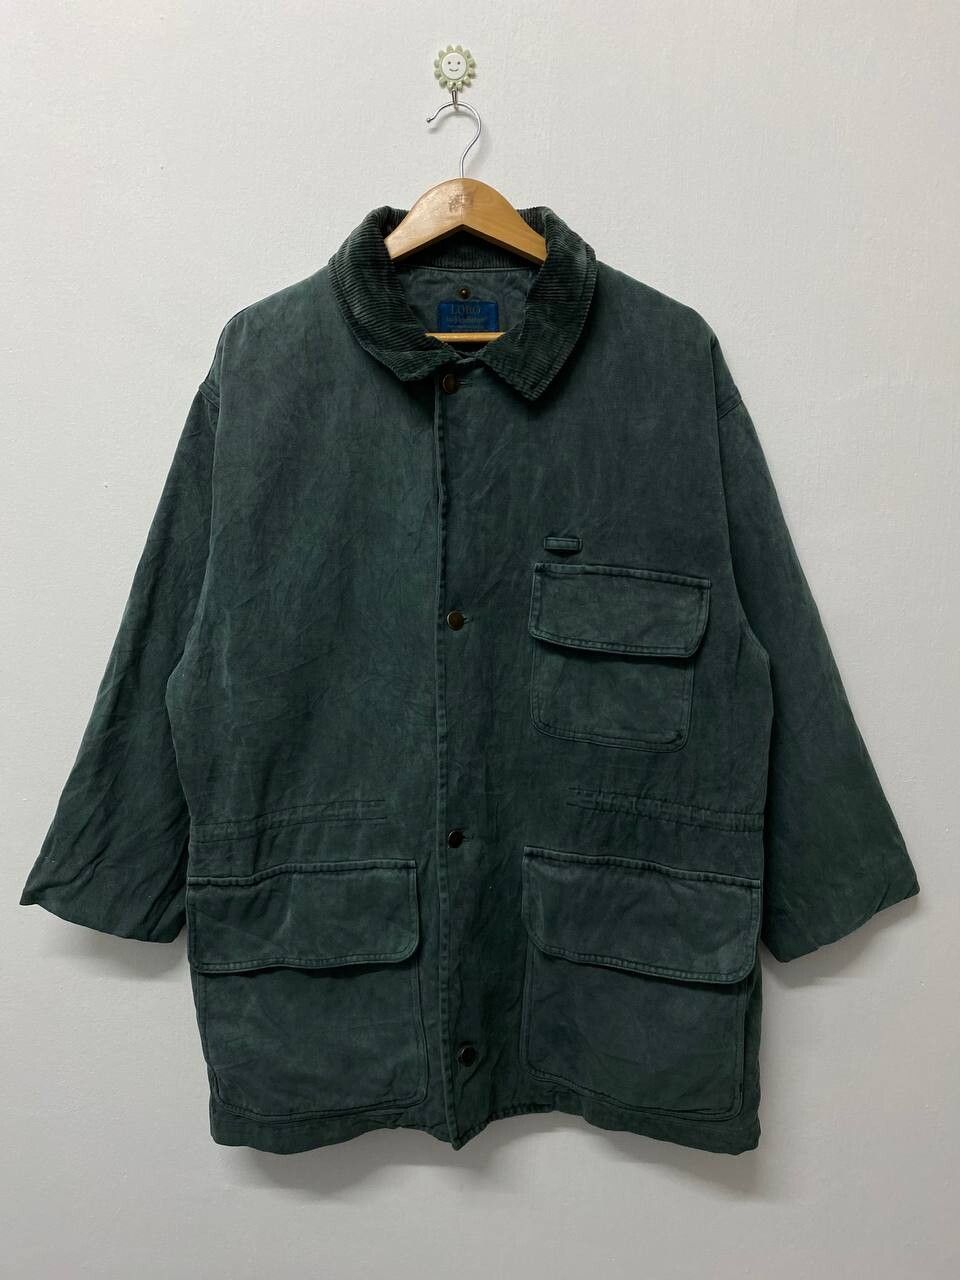 Vintage vintage lobo by pendleton khakis jacket nice design Size US M / EU 48-50 / 2 - 1 Preview